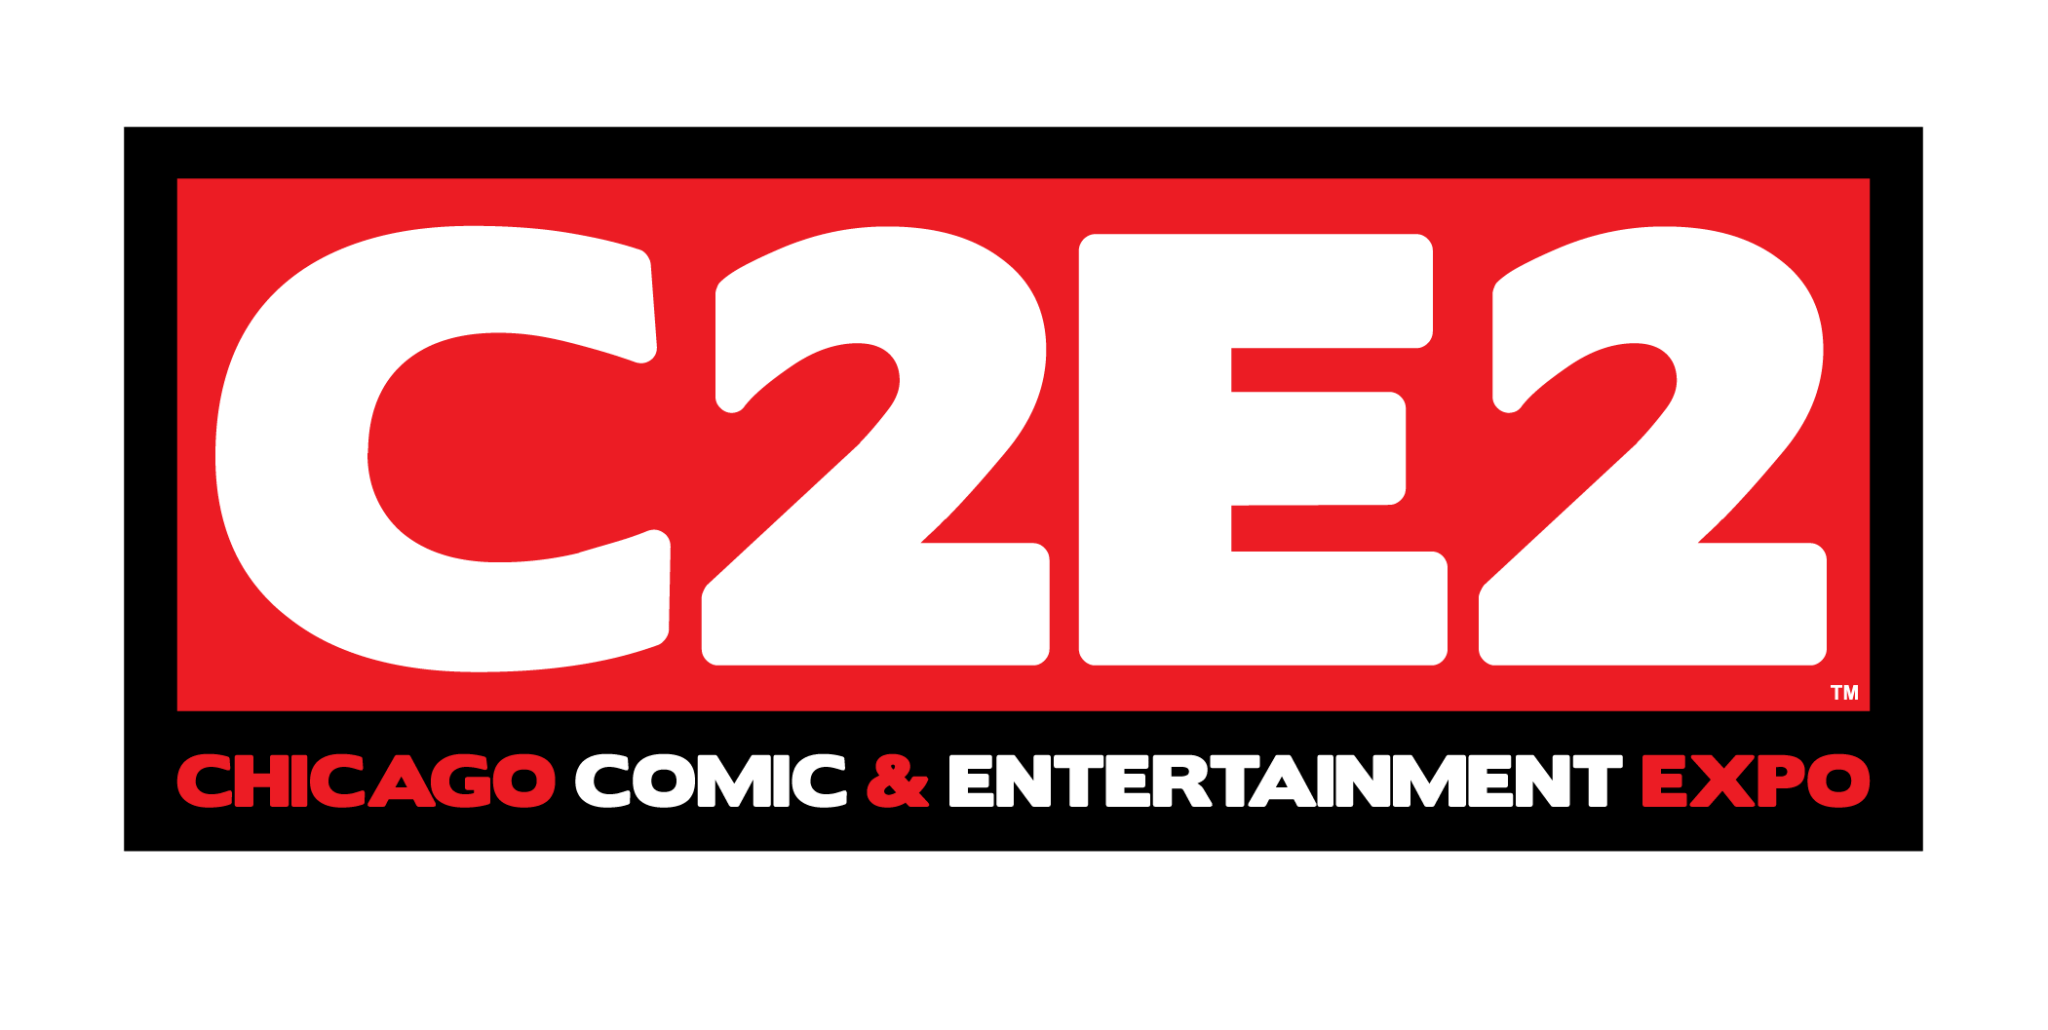 C2E2 (Chicago Comic & Entertainment Expo)